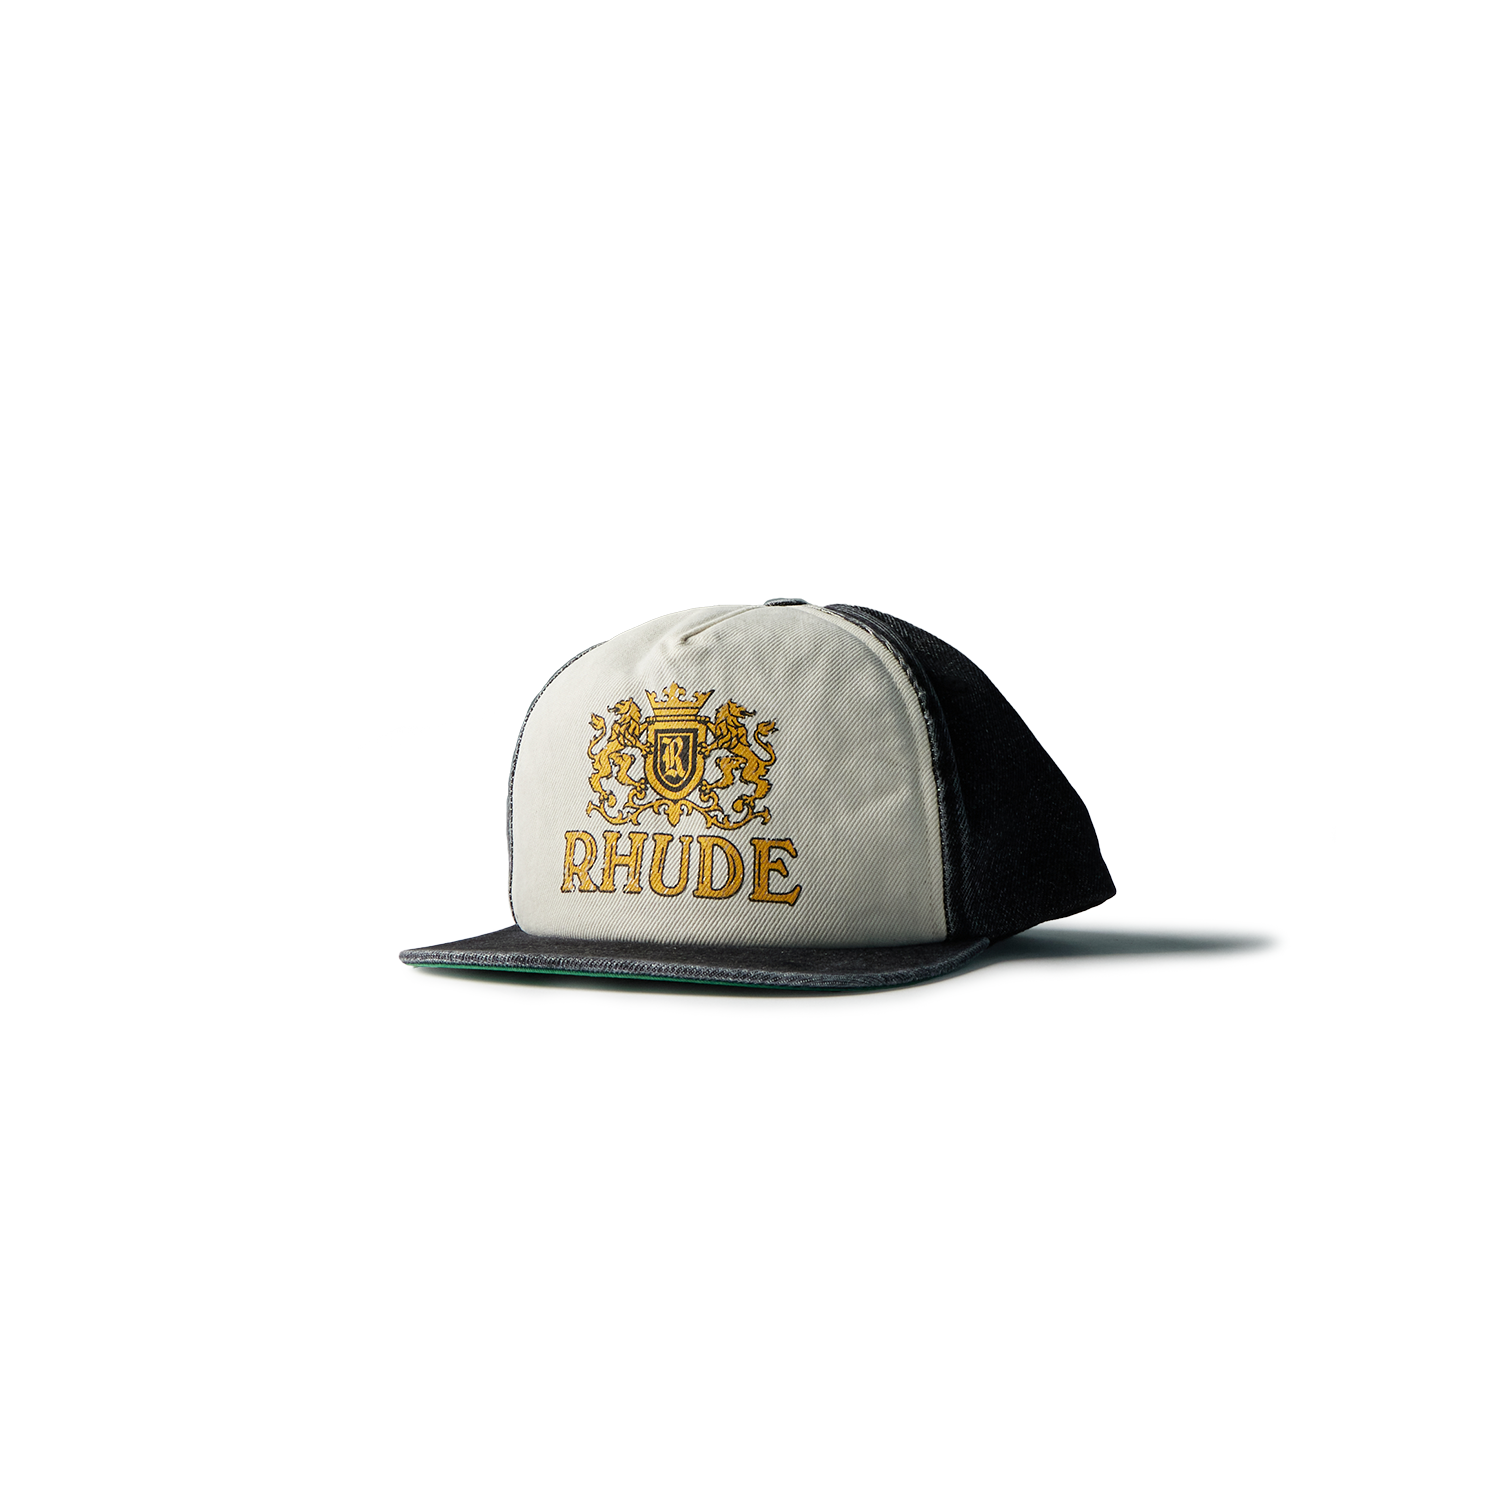 RHUDE - Cresta Denim Hat product image